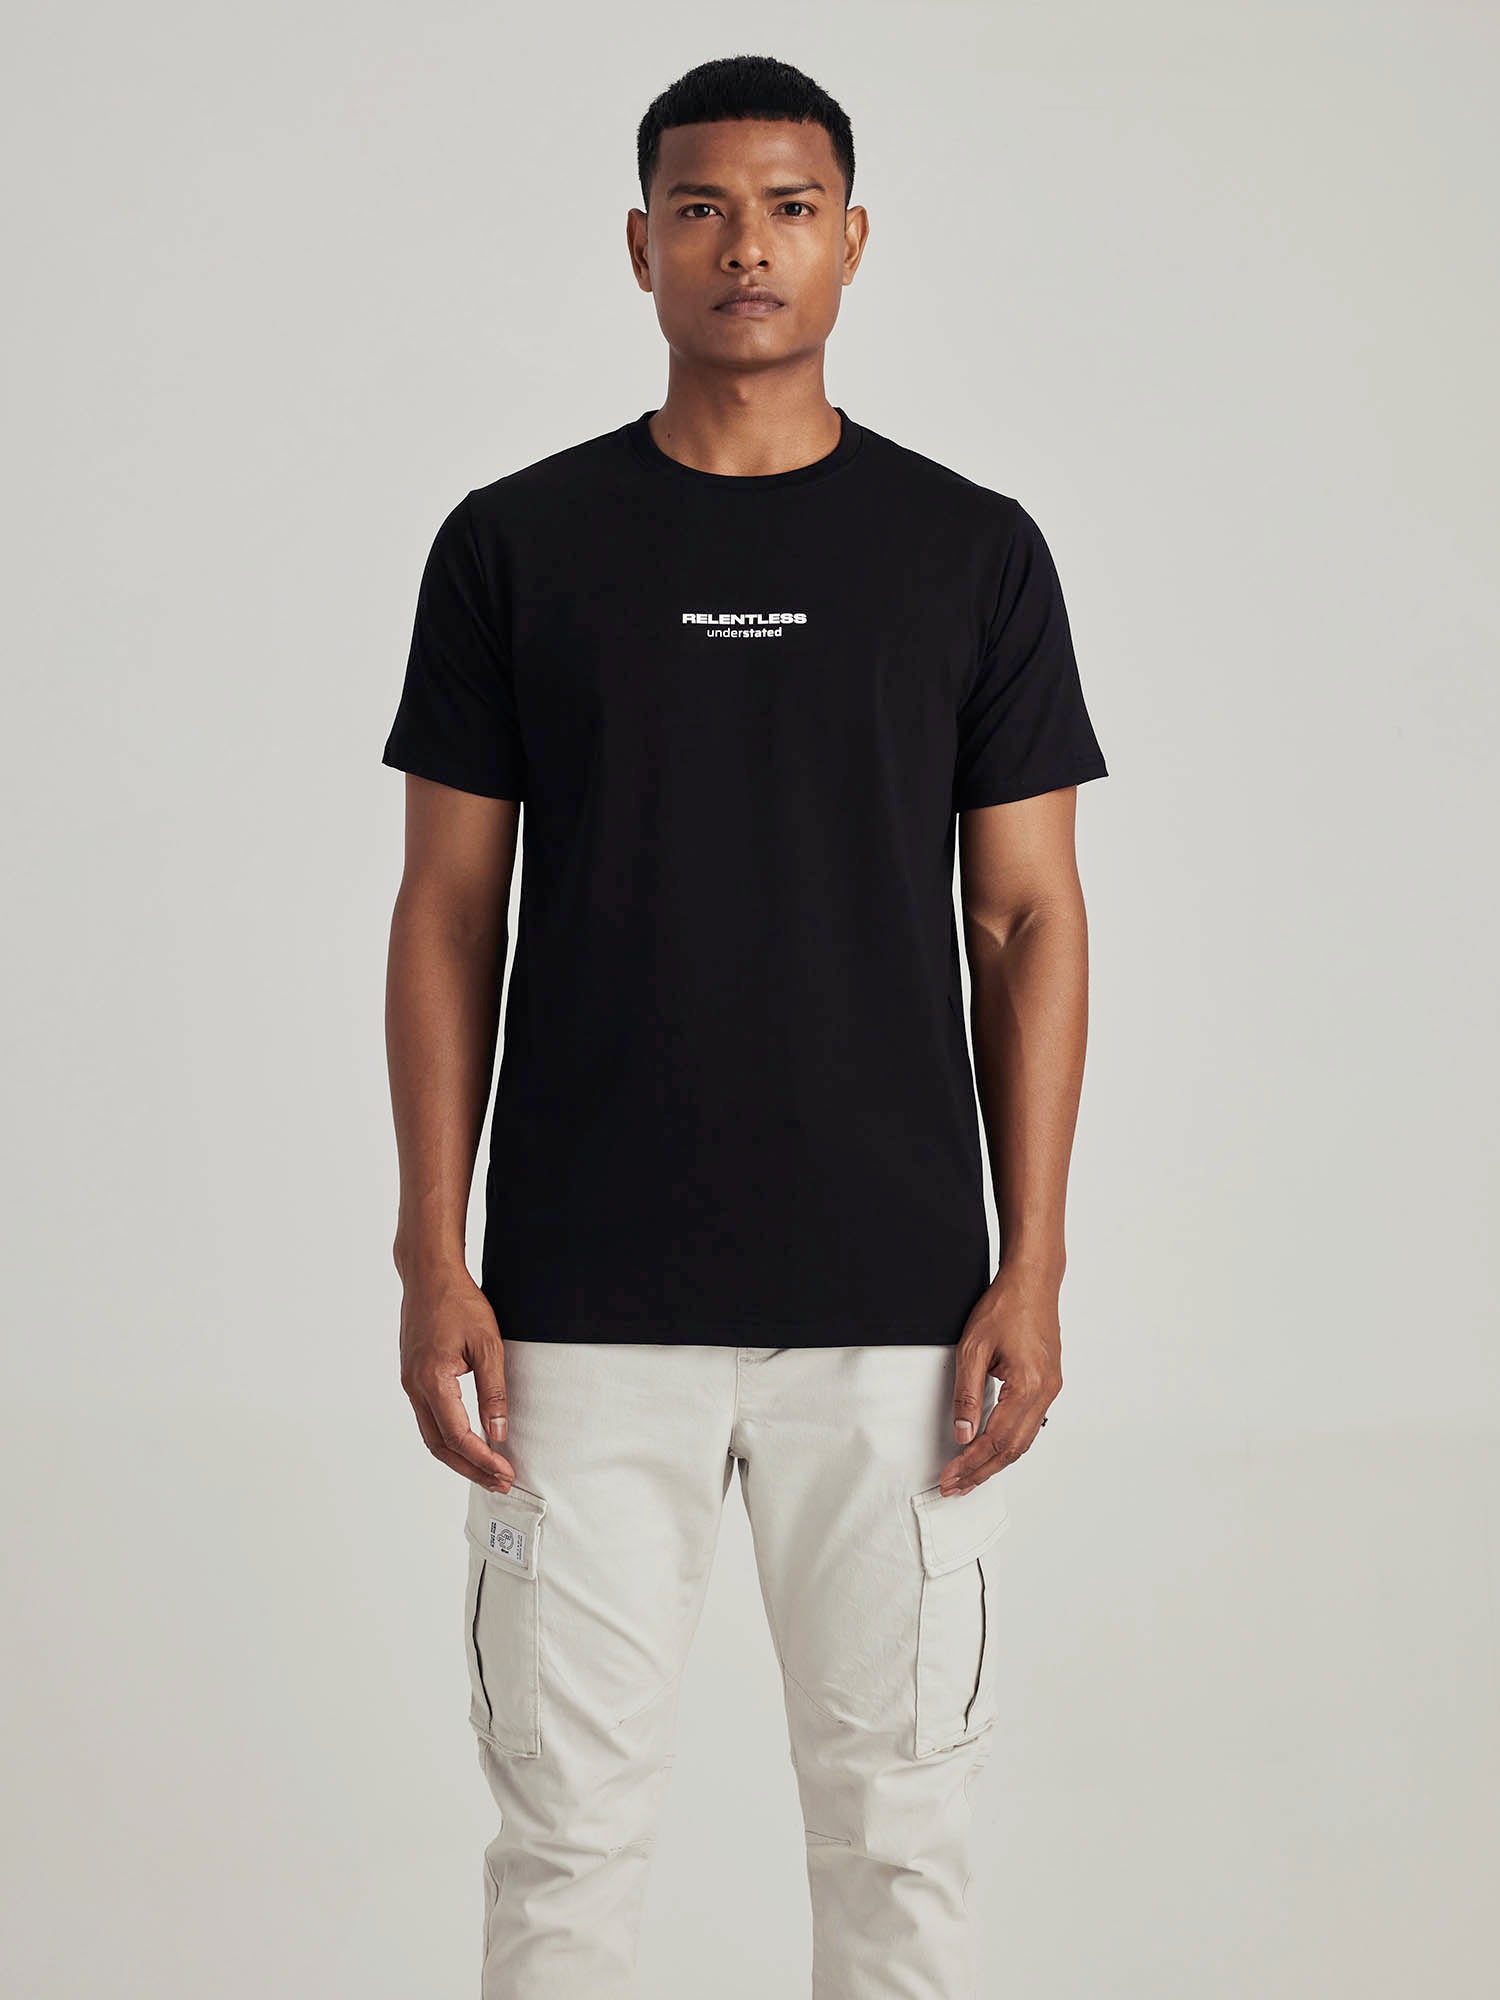 Relentless / Regular T-Shirt (Black)